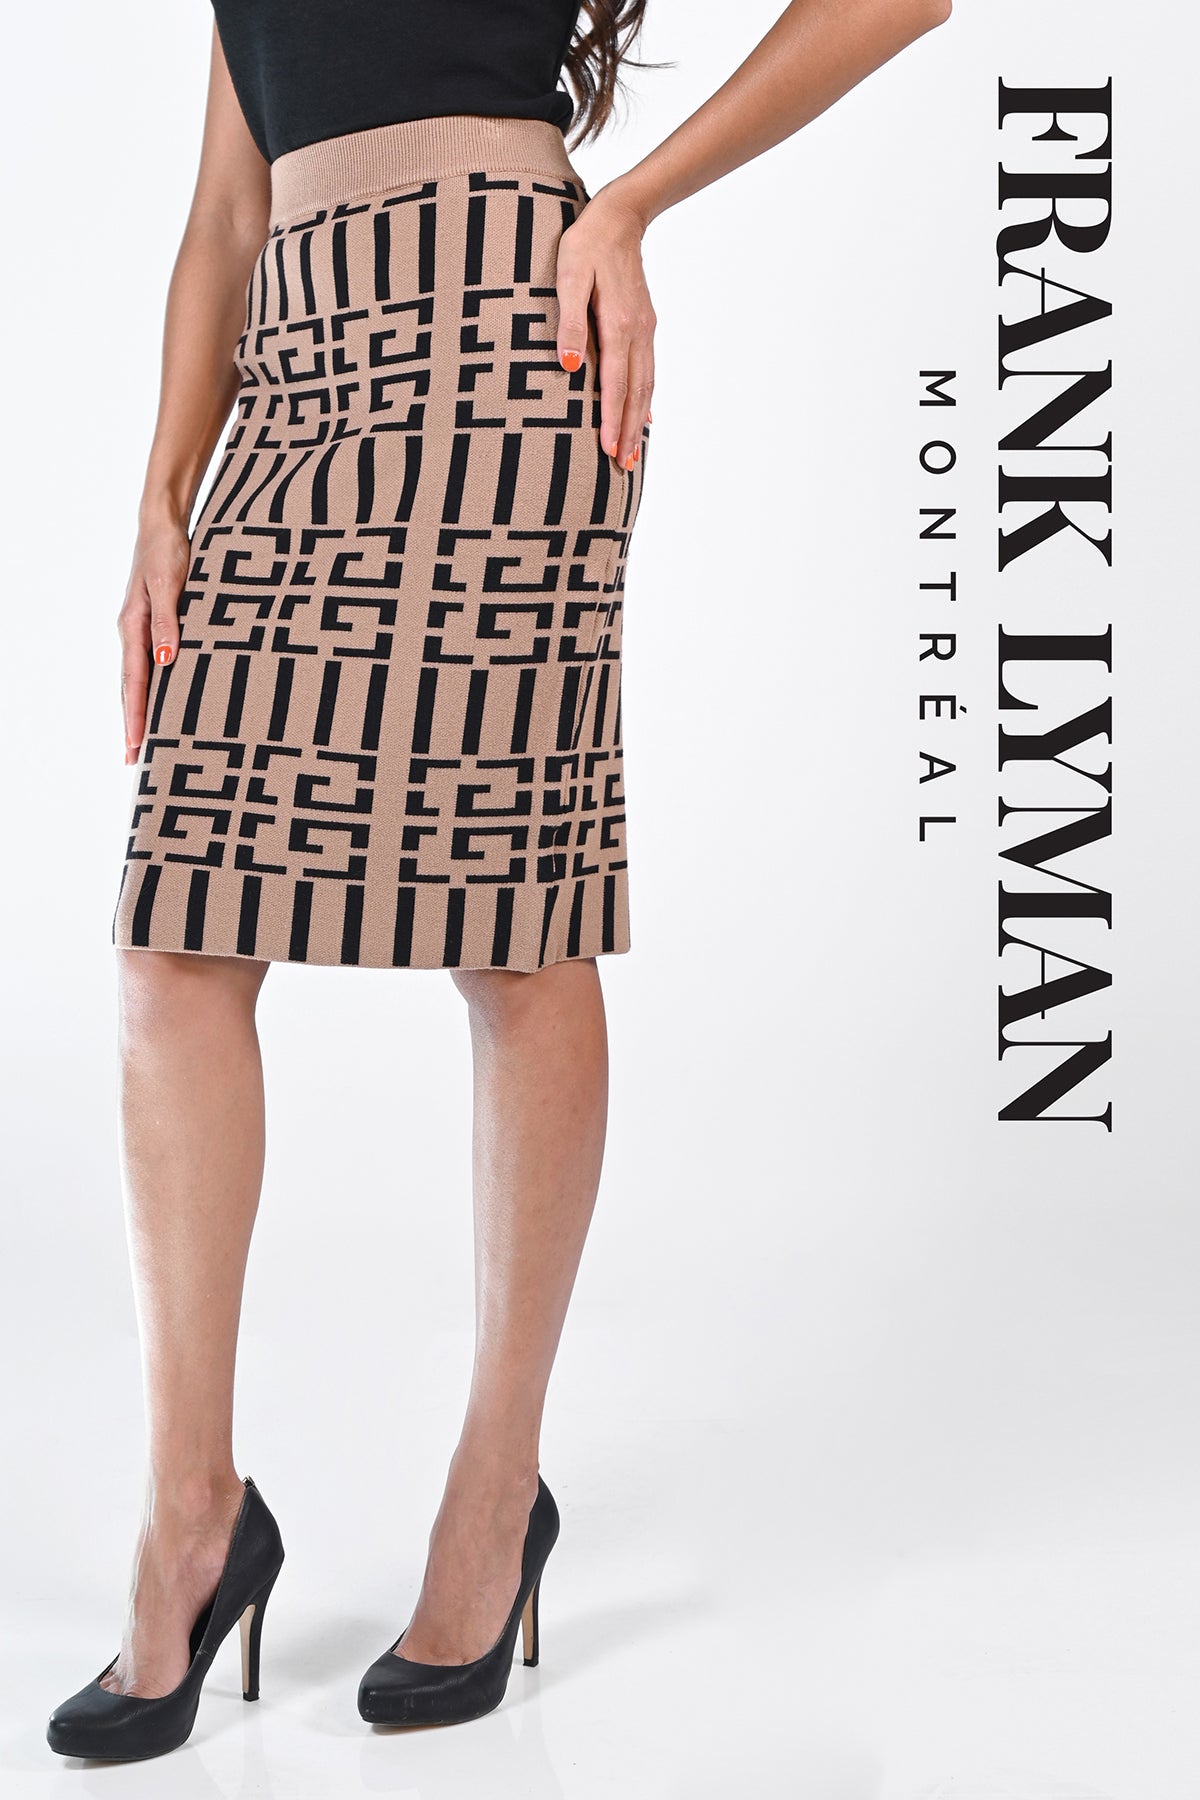 Frank Lyman Montreal Skirts-Frank Lyman Montreal Beige Knit Skirt-Buy Frank Lyman Montreal Skirts Online-Frank Lyman Montreal Online Shop